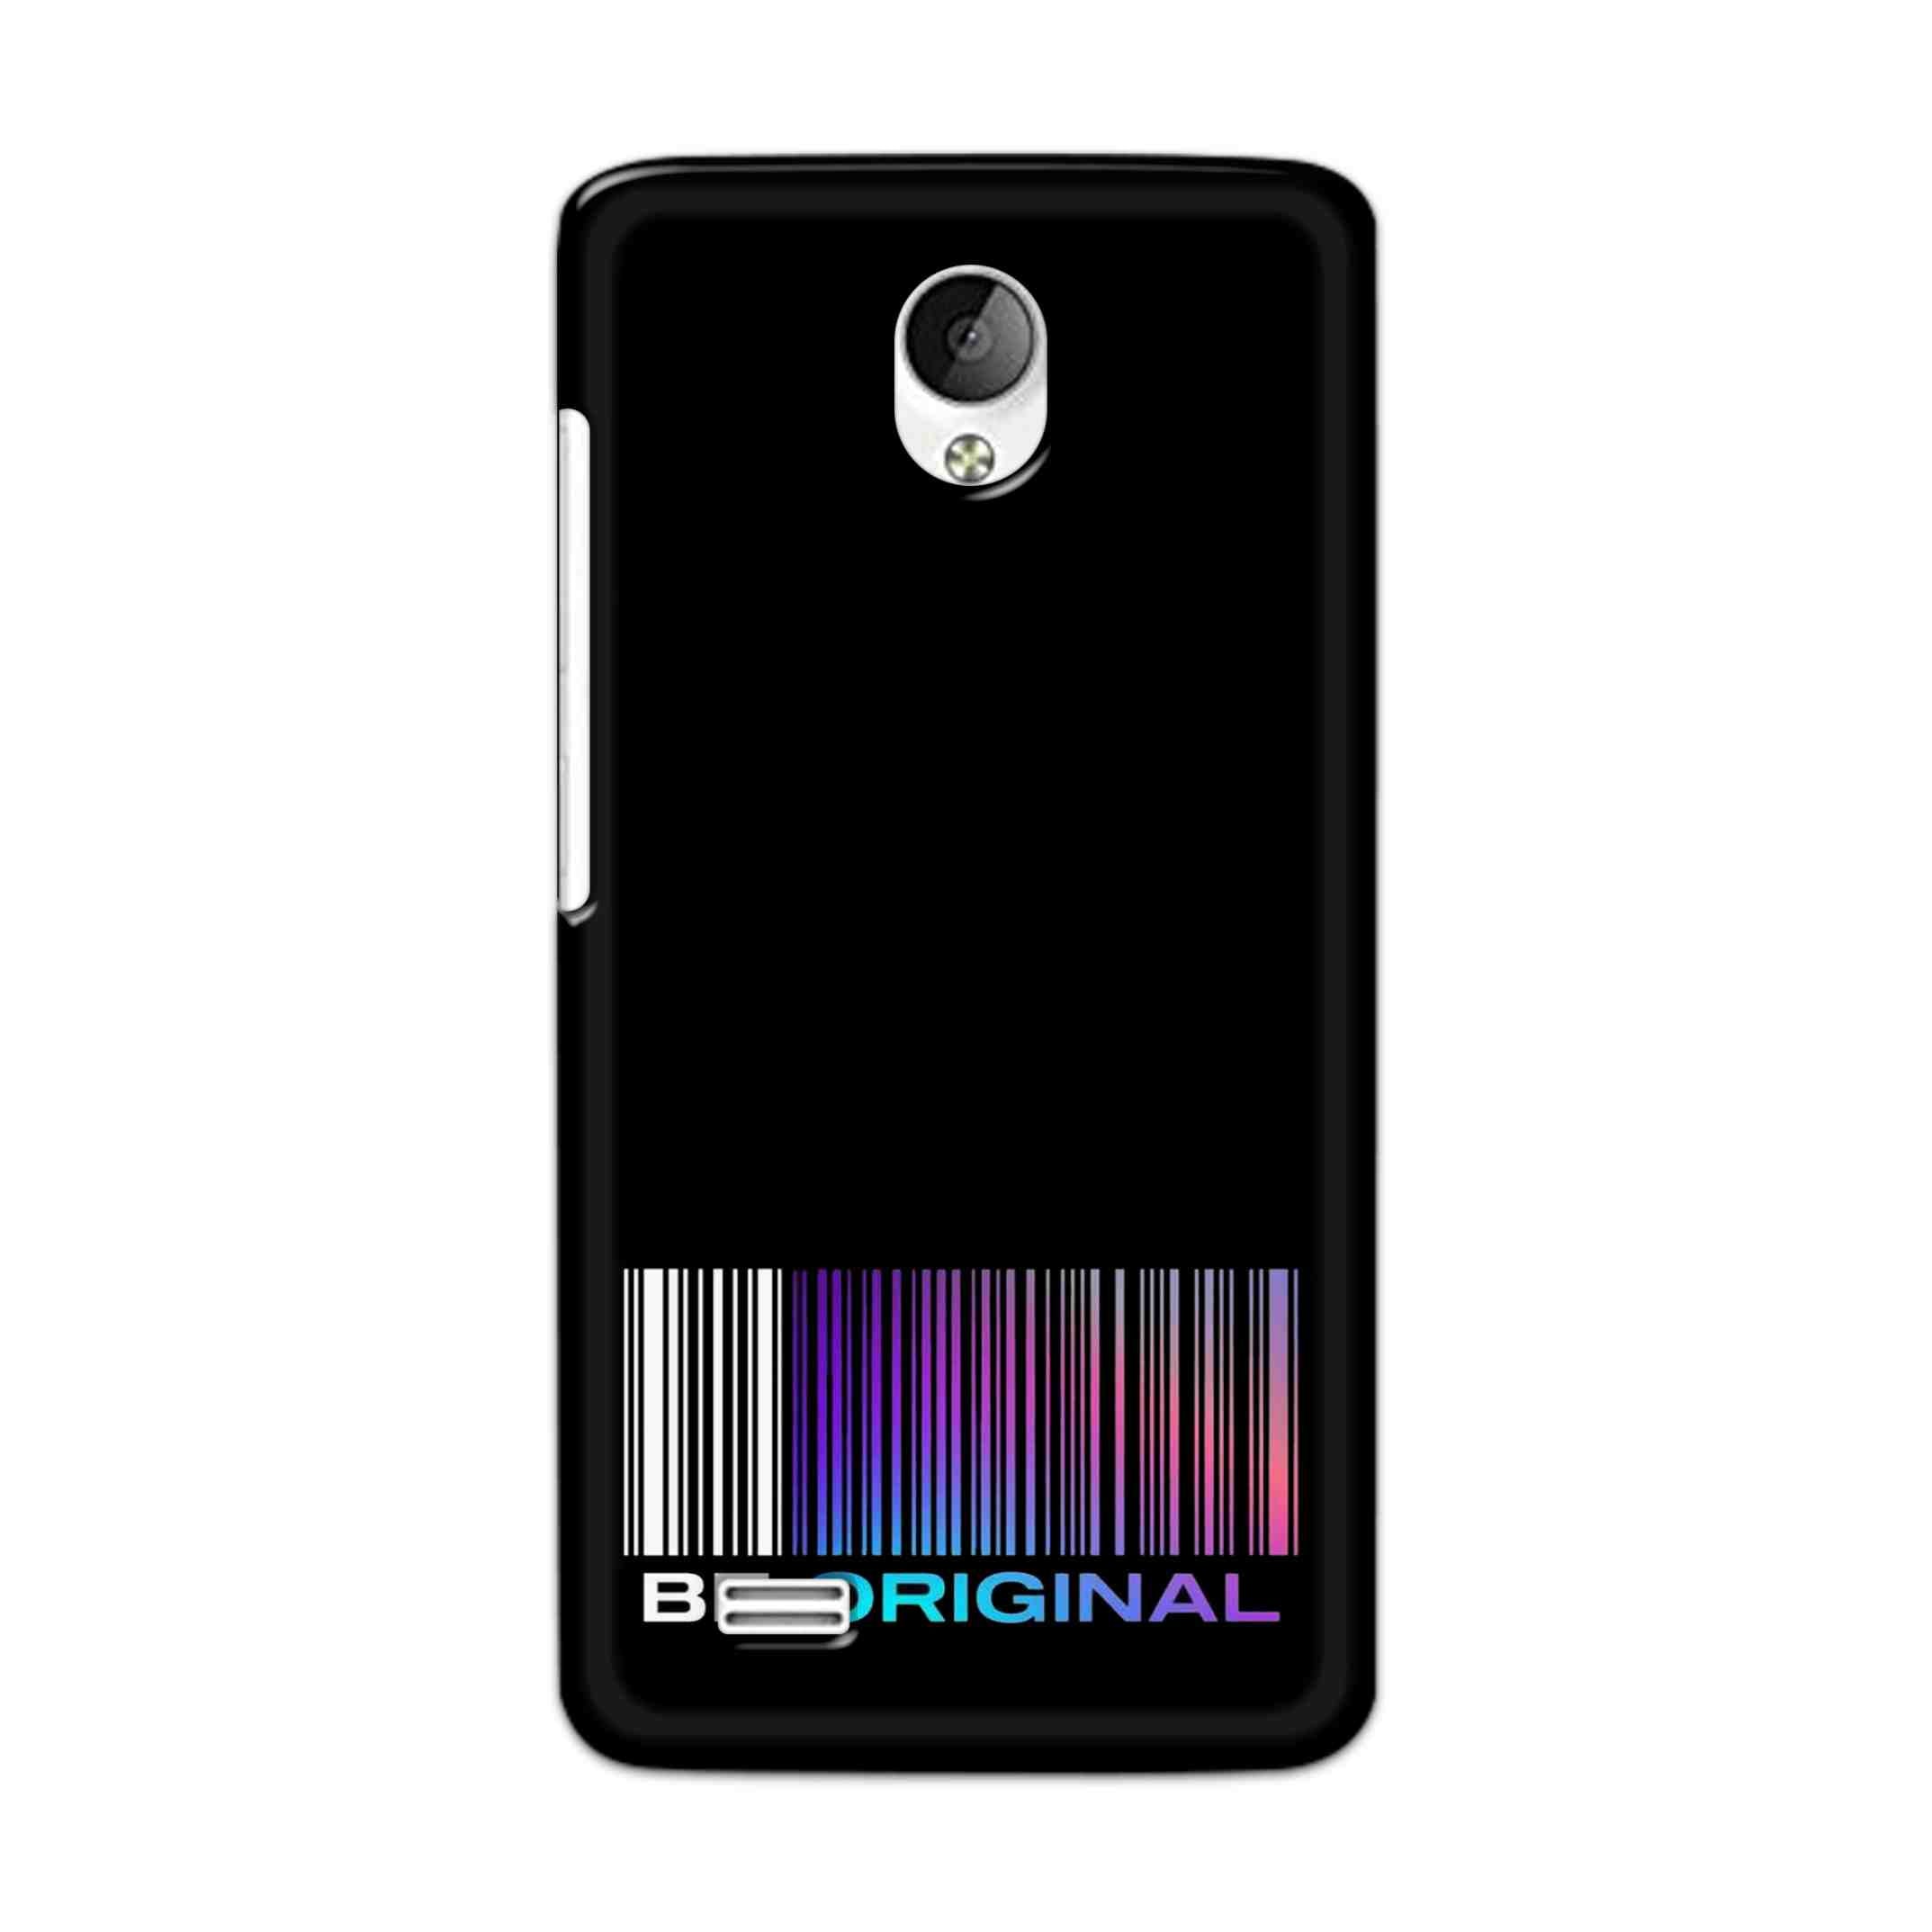 Buy Be Original Hard Back Mobile Phone Case Cover For Vivo Y21 / Vivo Y21L Online